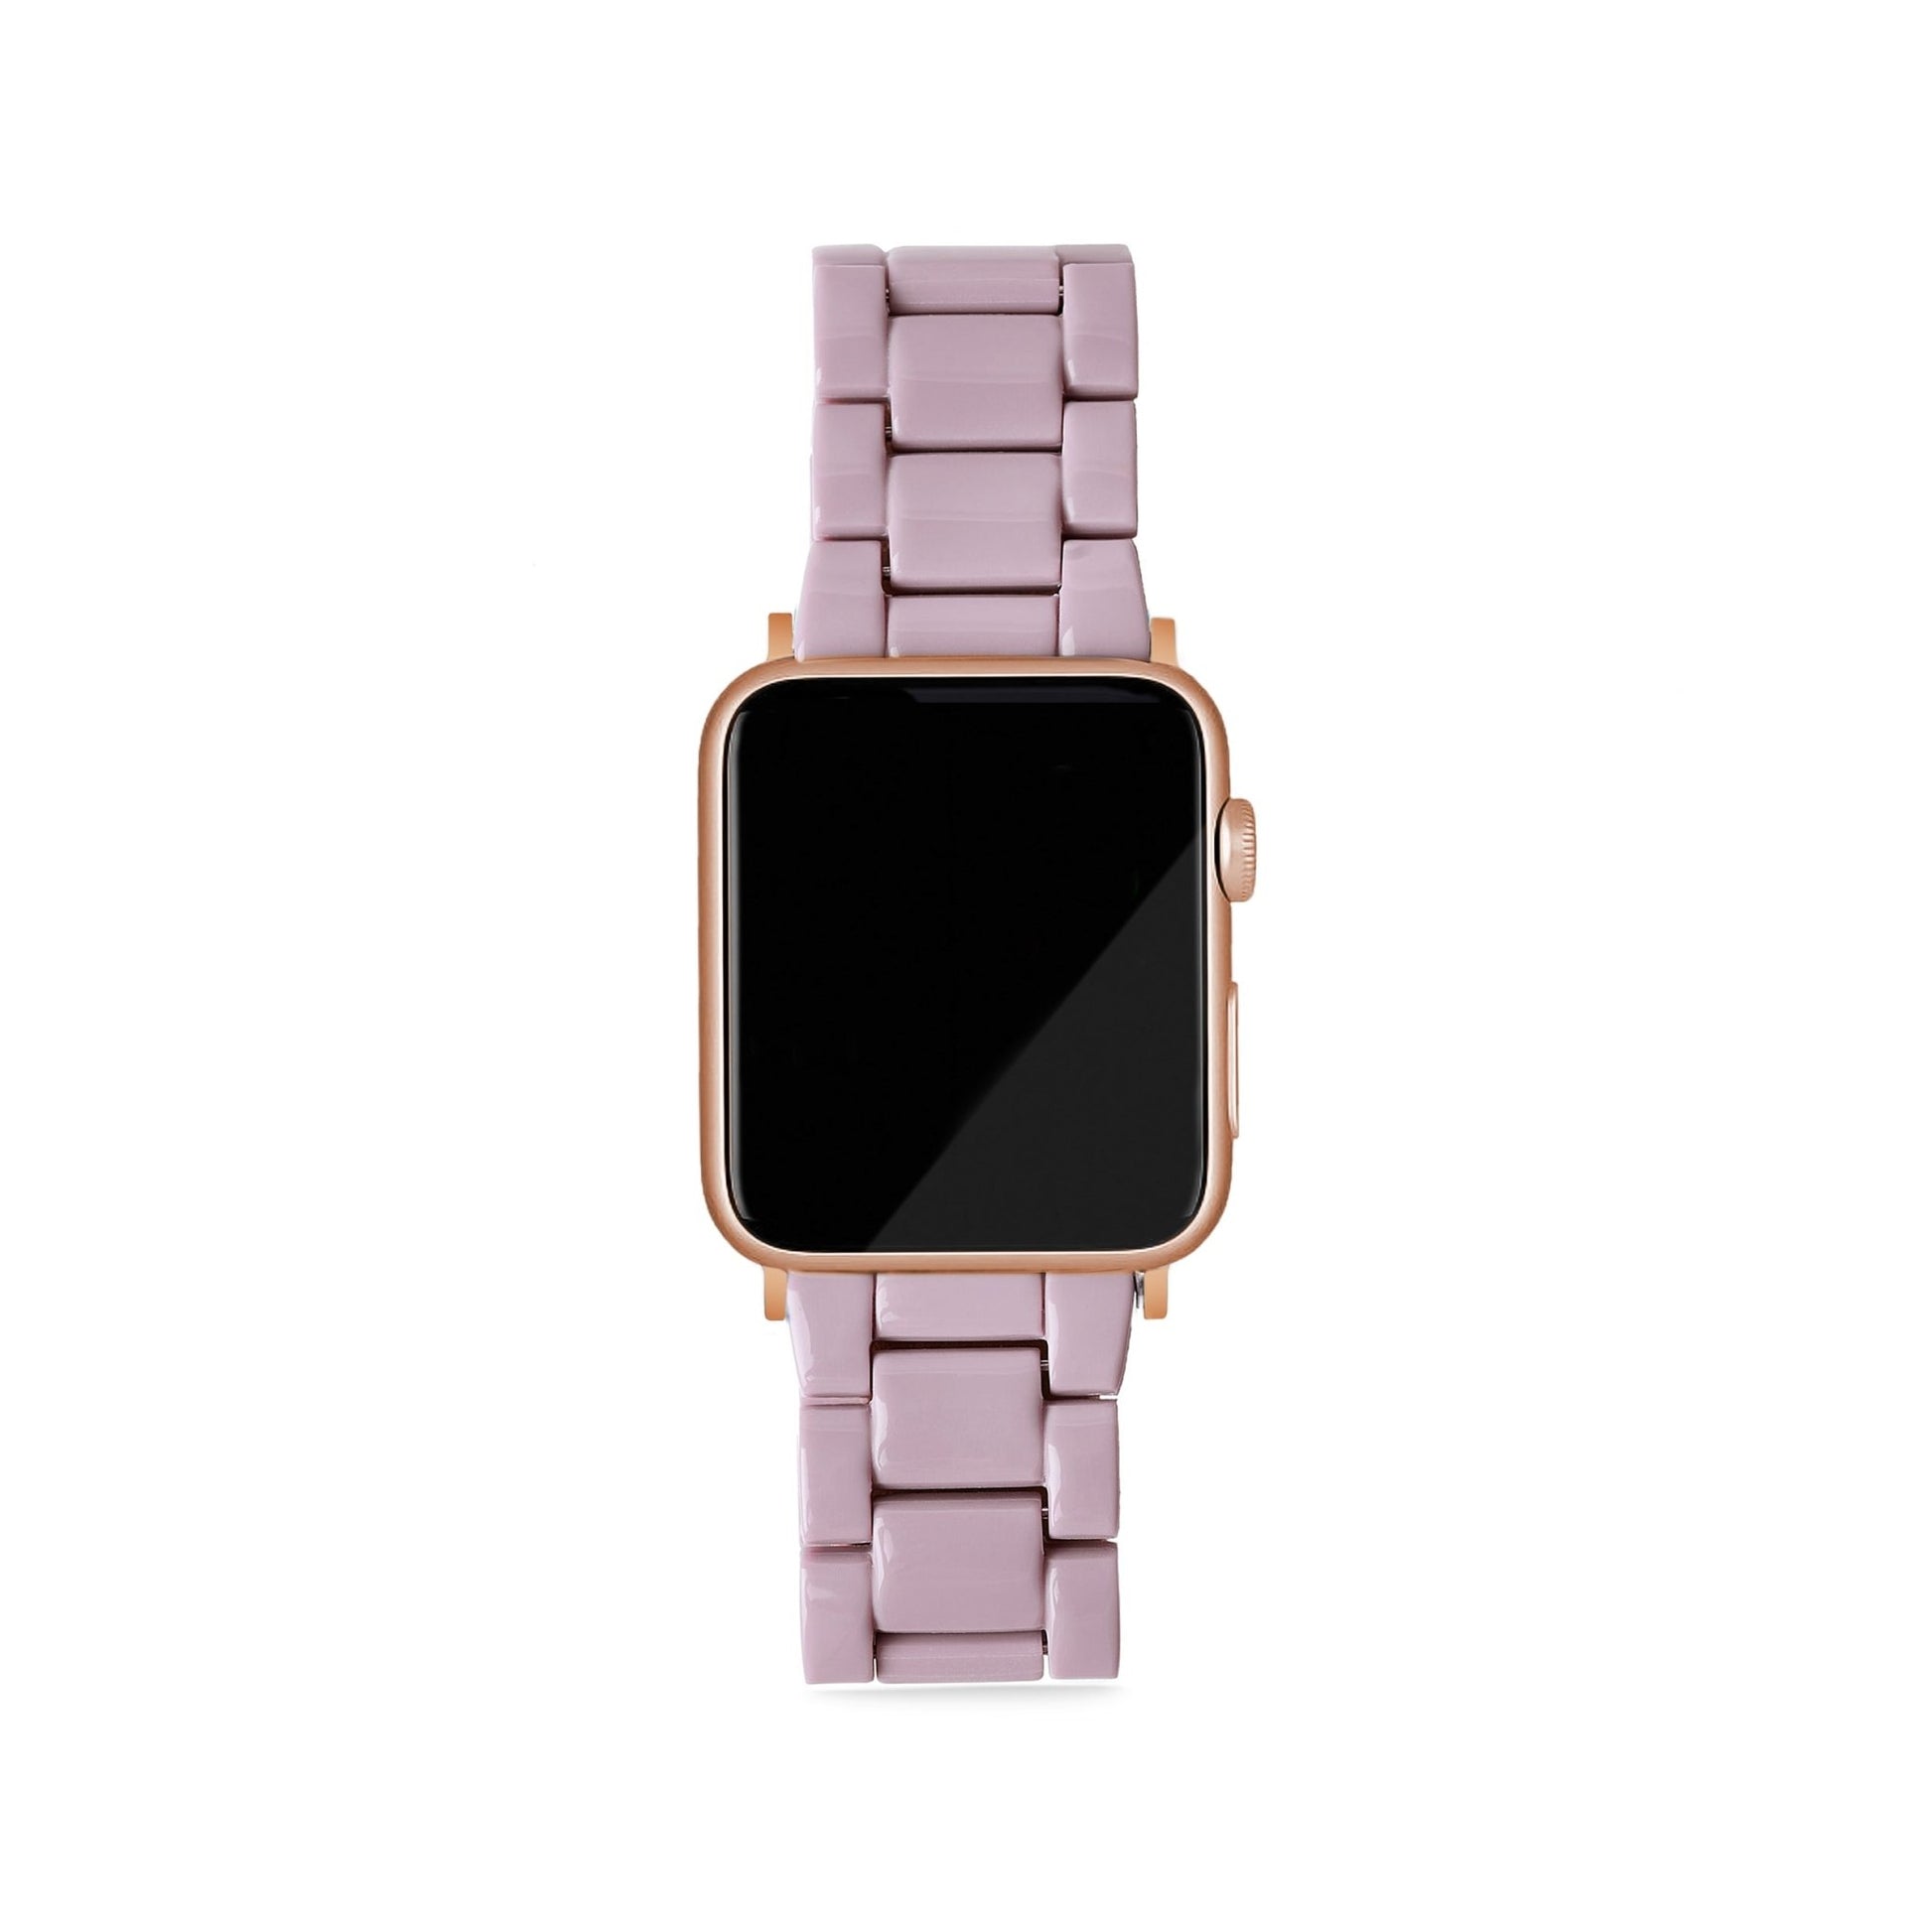 MACHETE Apple Watch Band in Rose Mauve